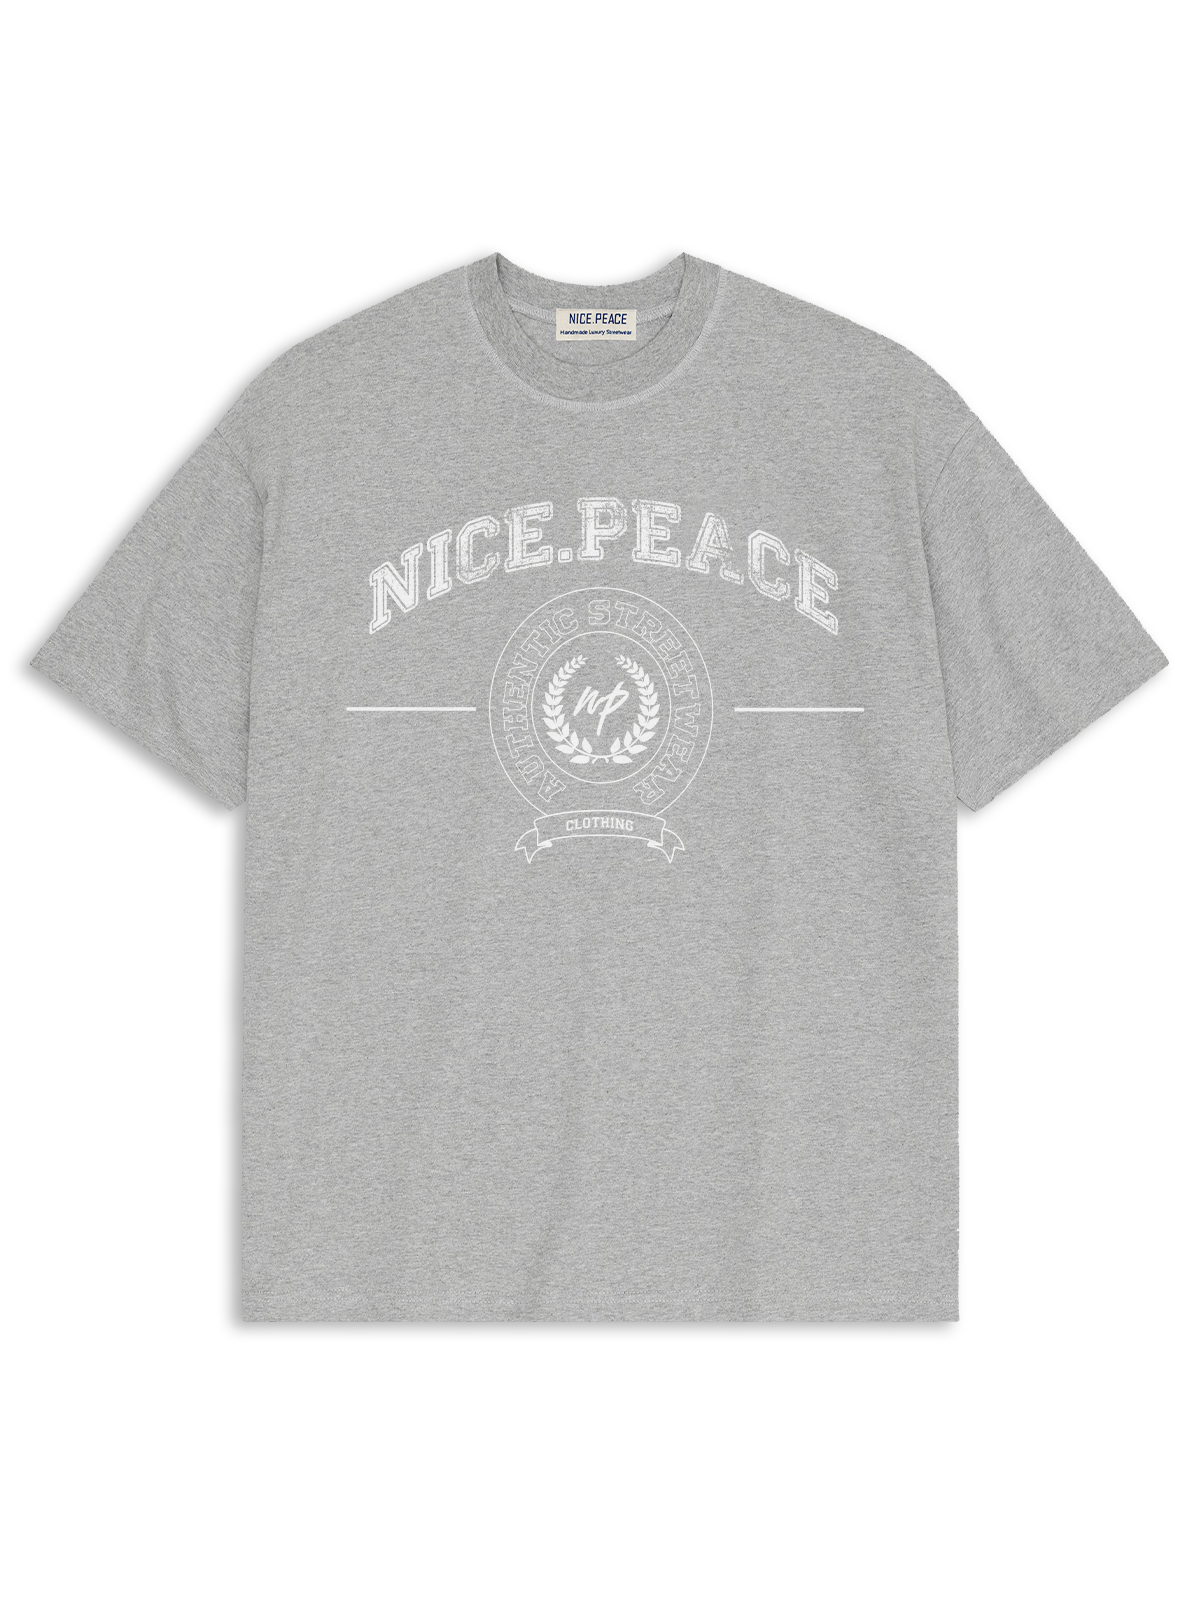 NicePeace T-Shirt Grey